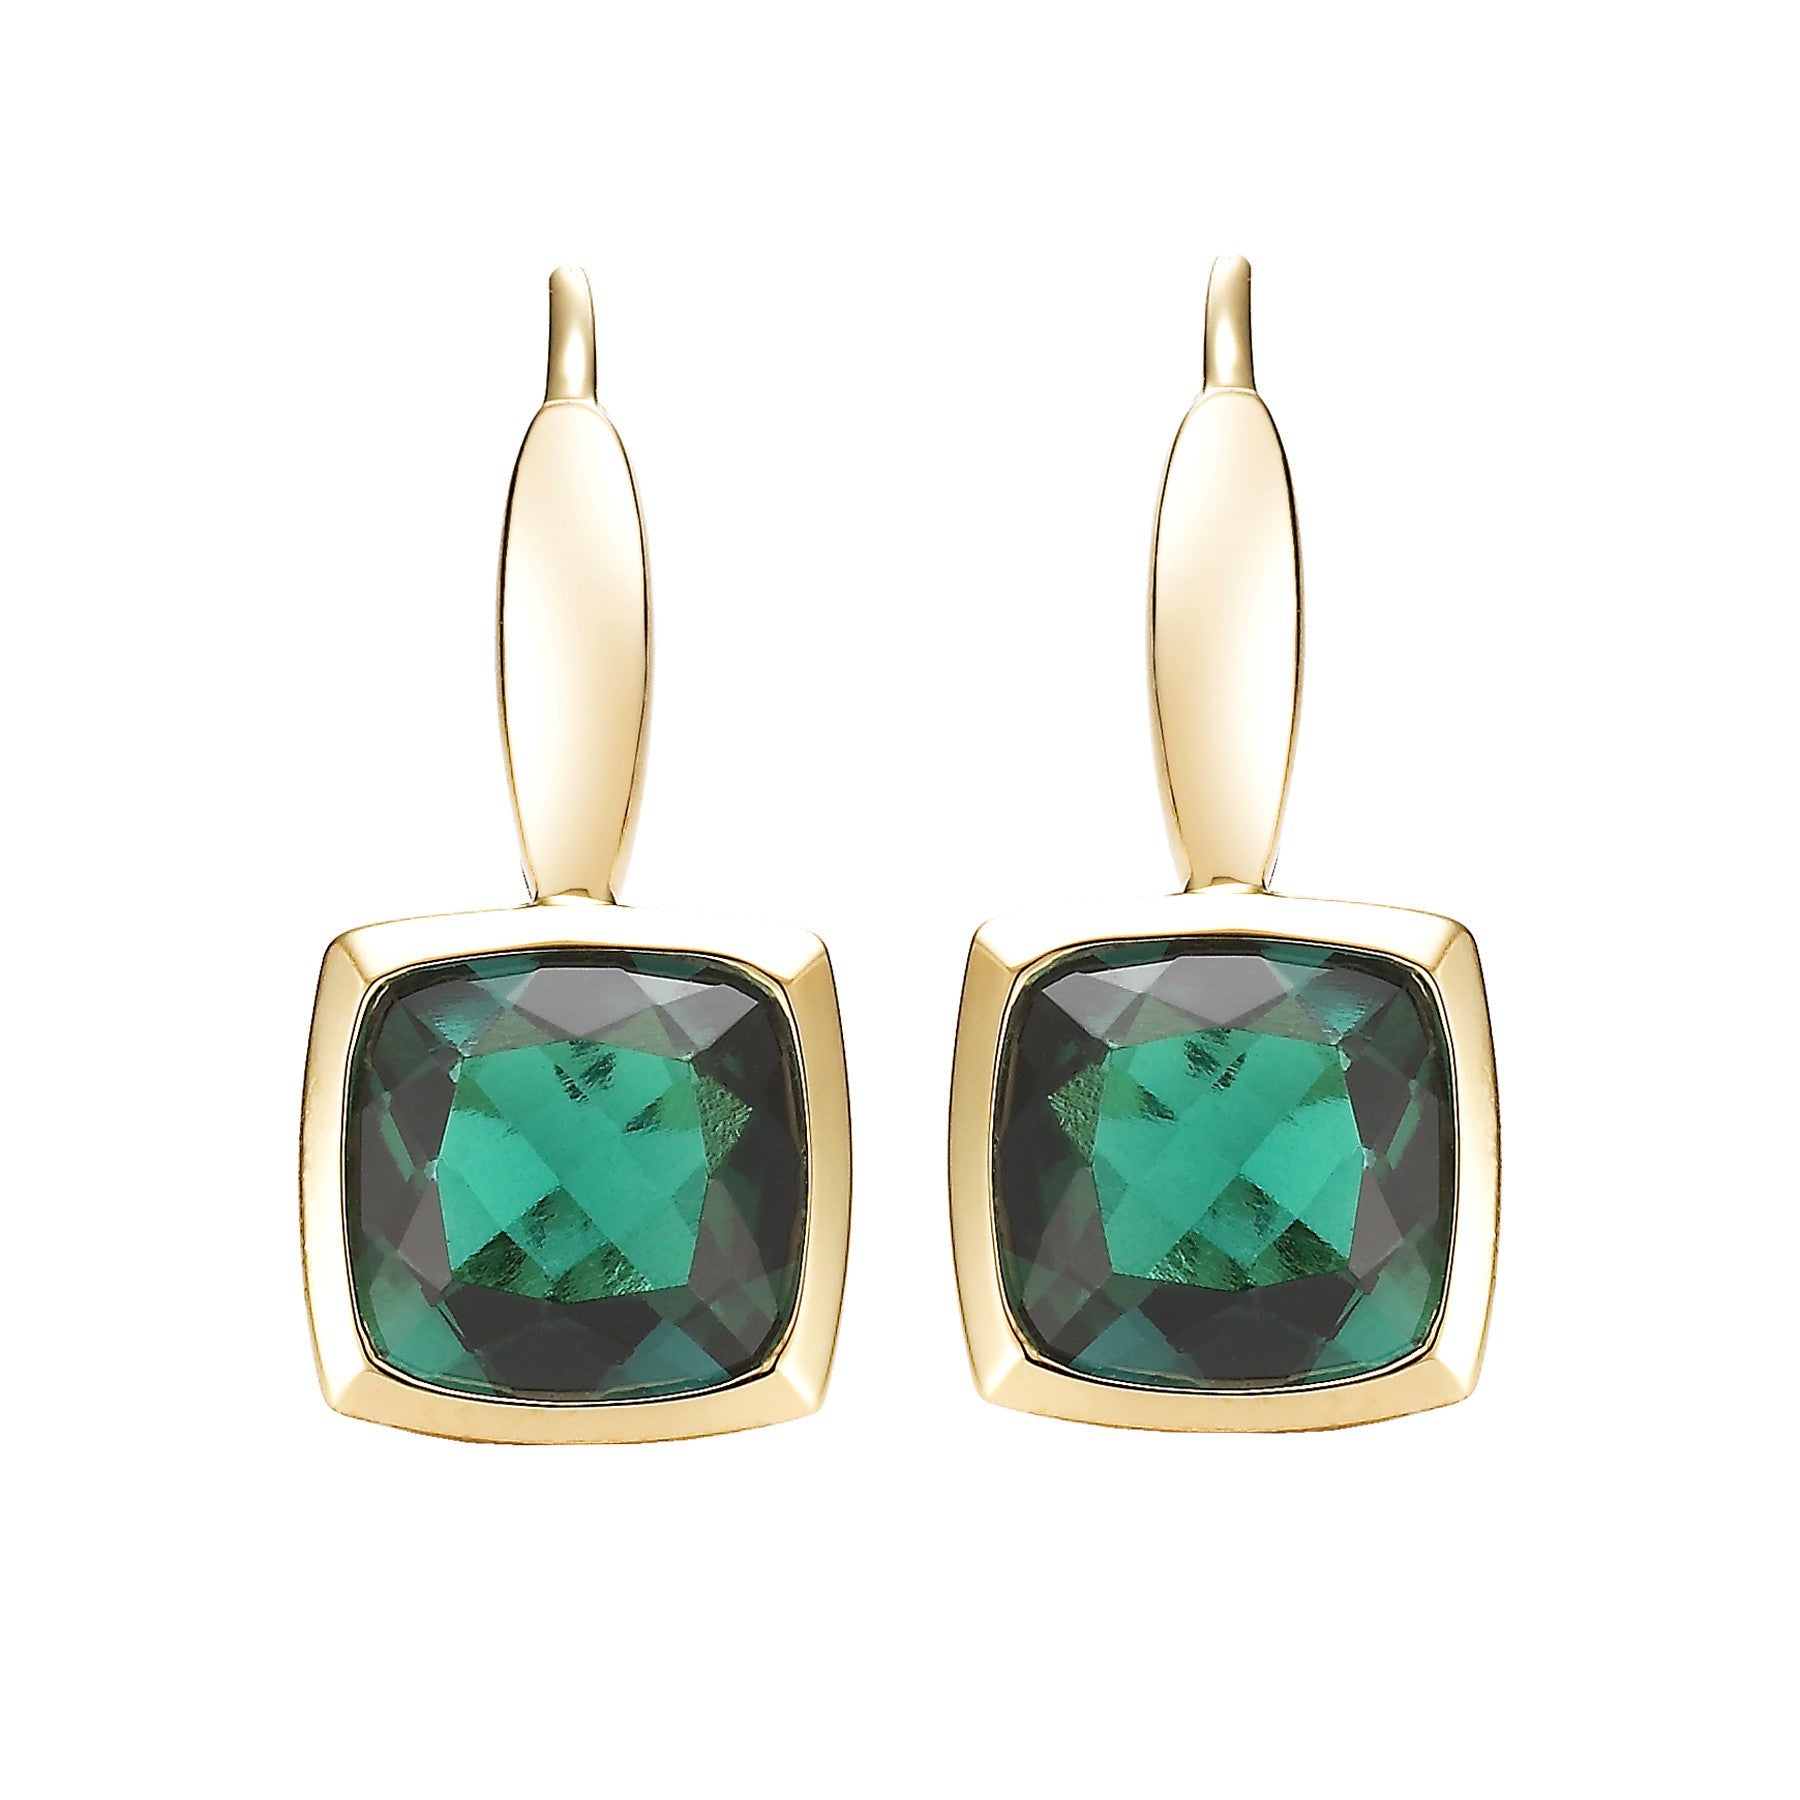 14K Yellow Gold Bezel Set Emerald Earrings - Isaac Westman - 1